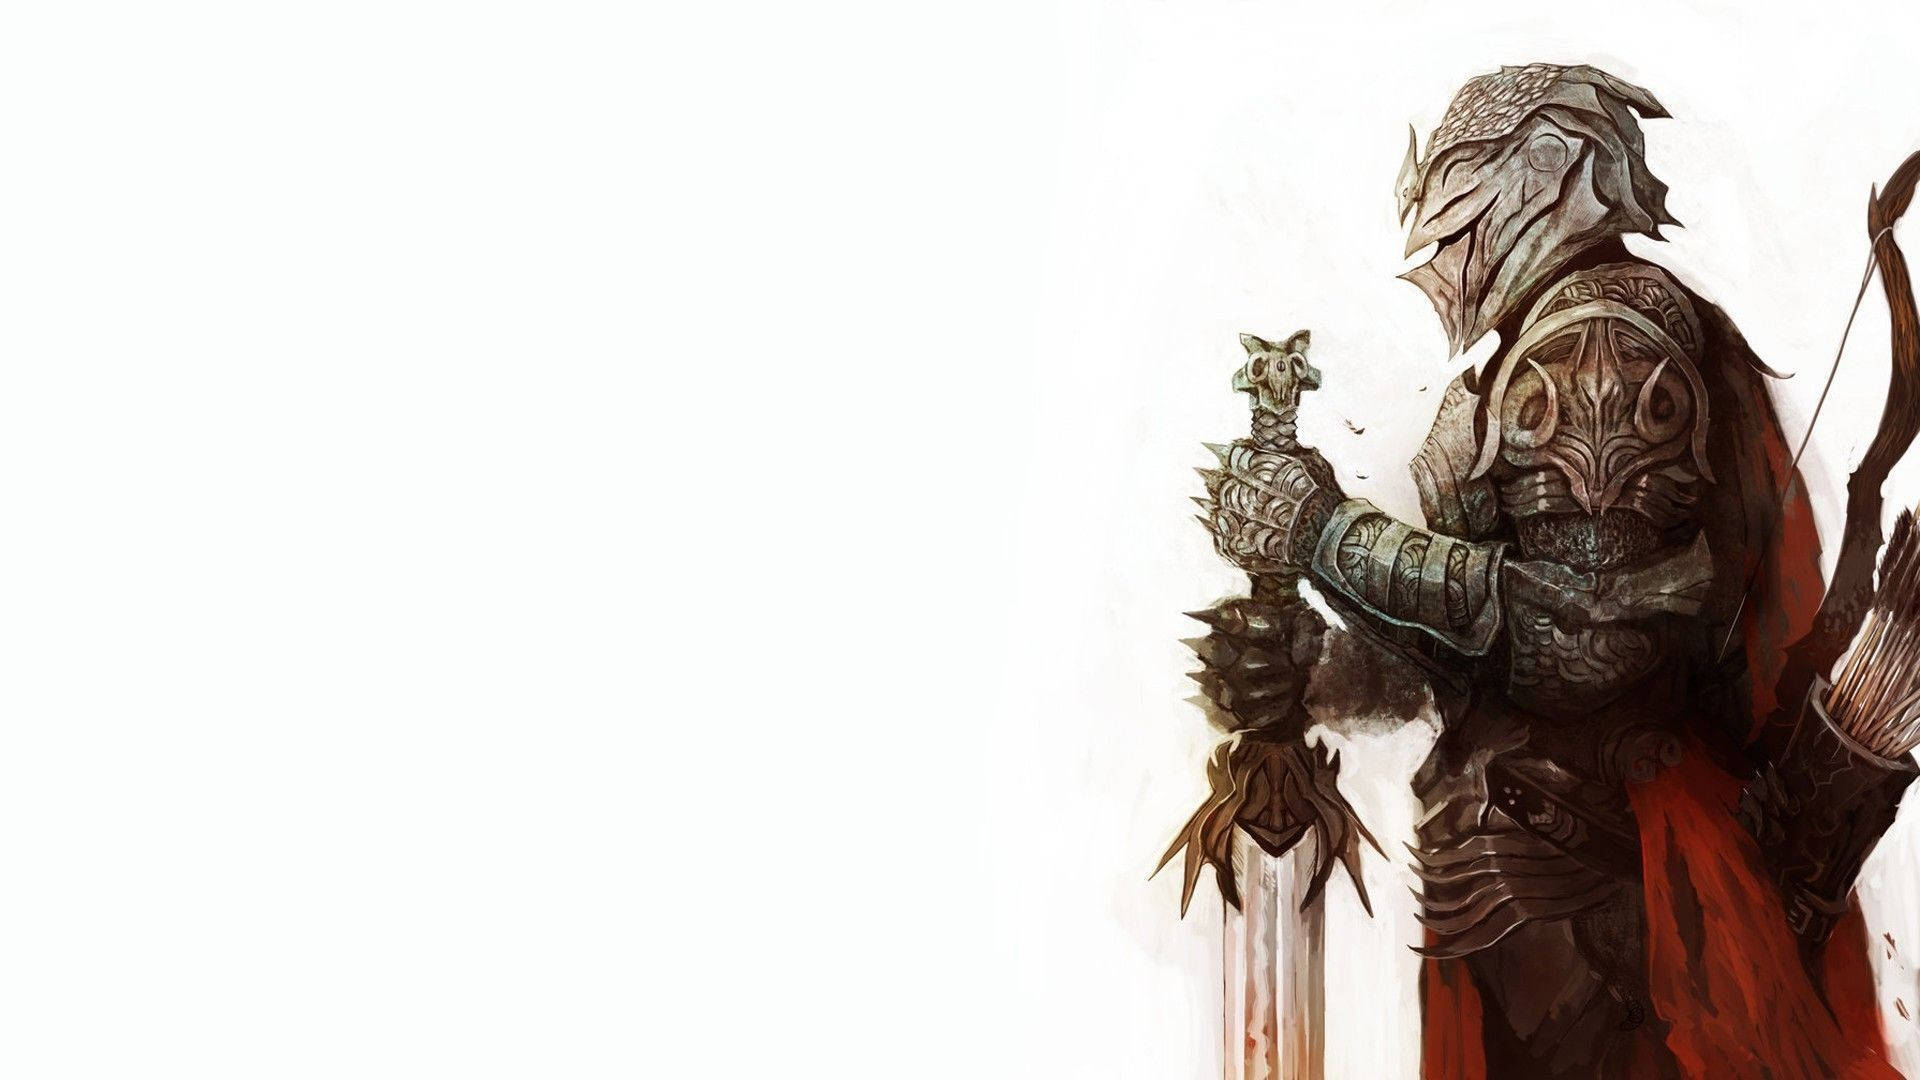 Fantasy Knight Holding Sword Background